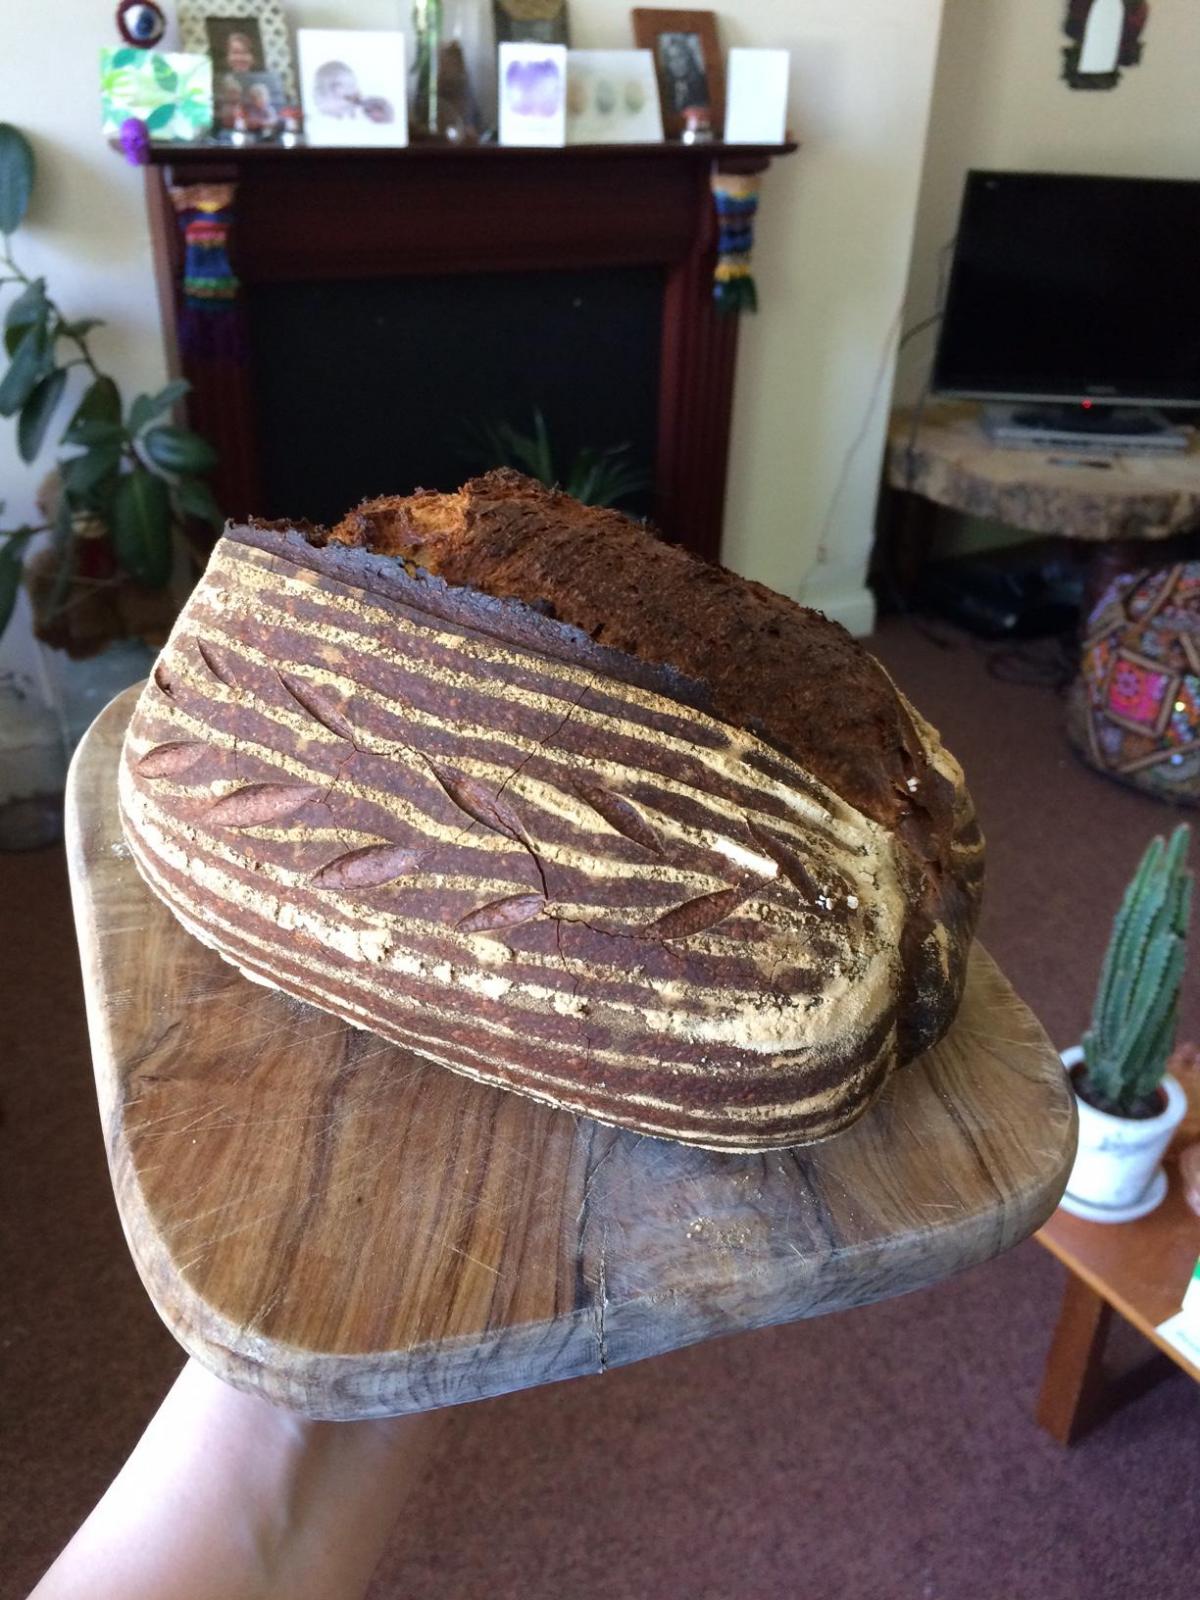 the good loaf!